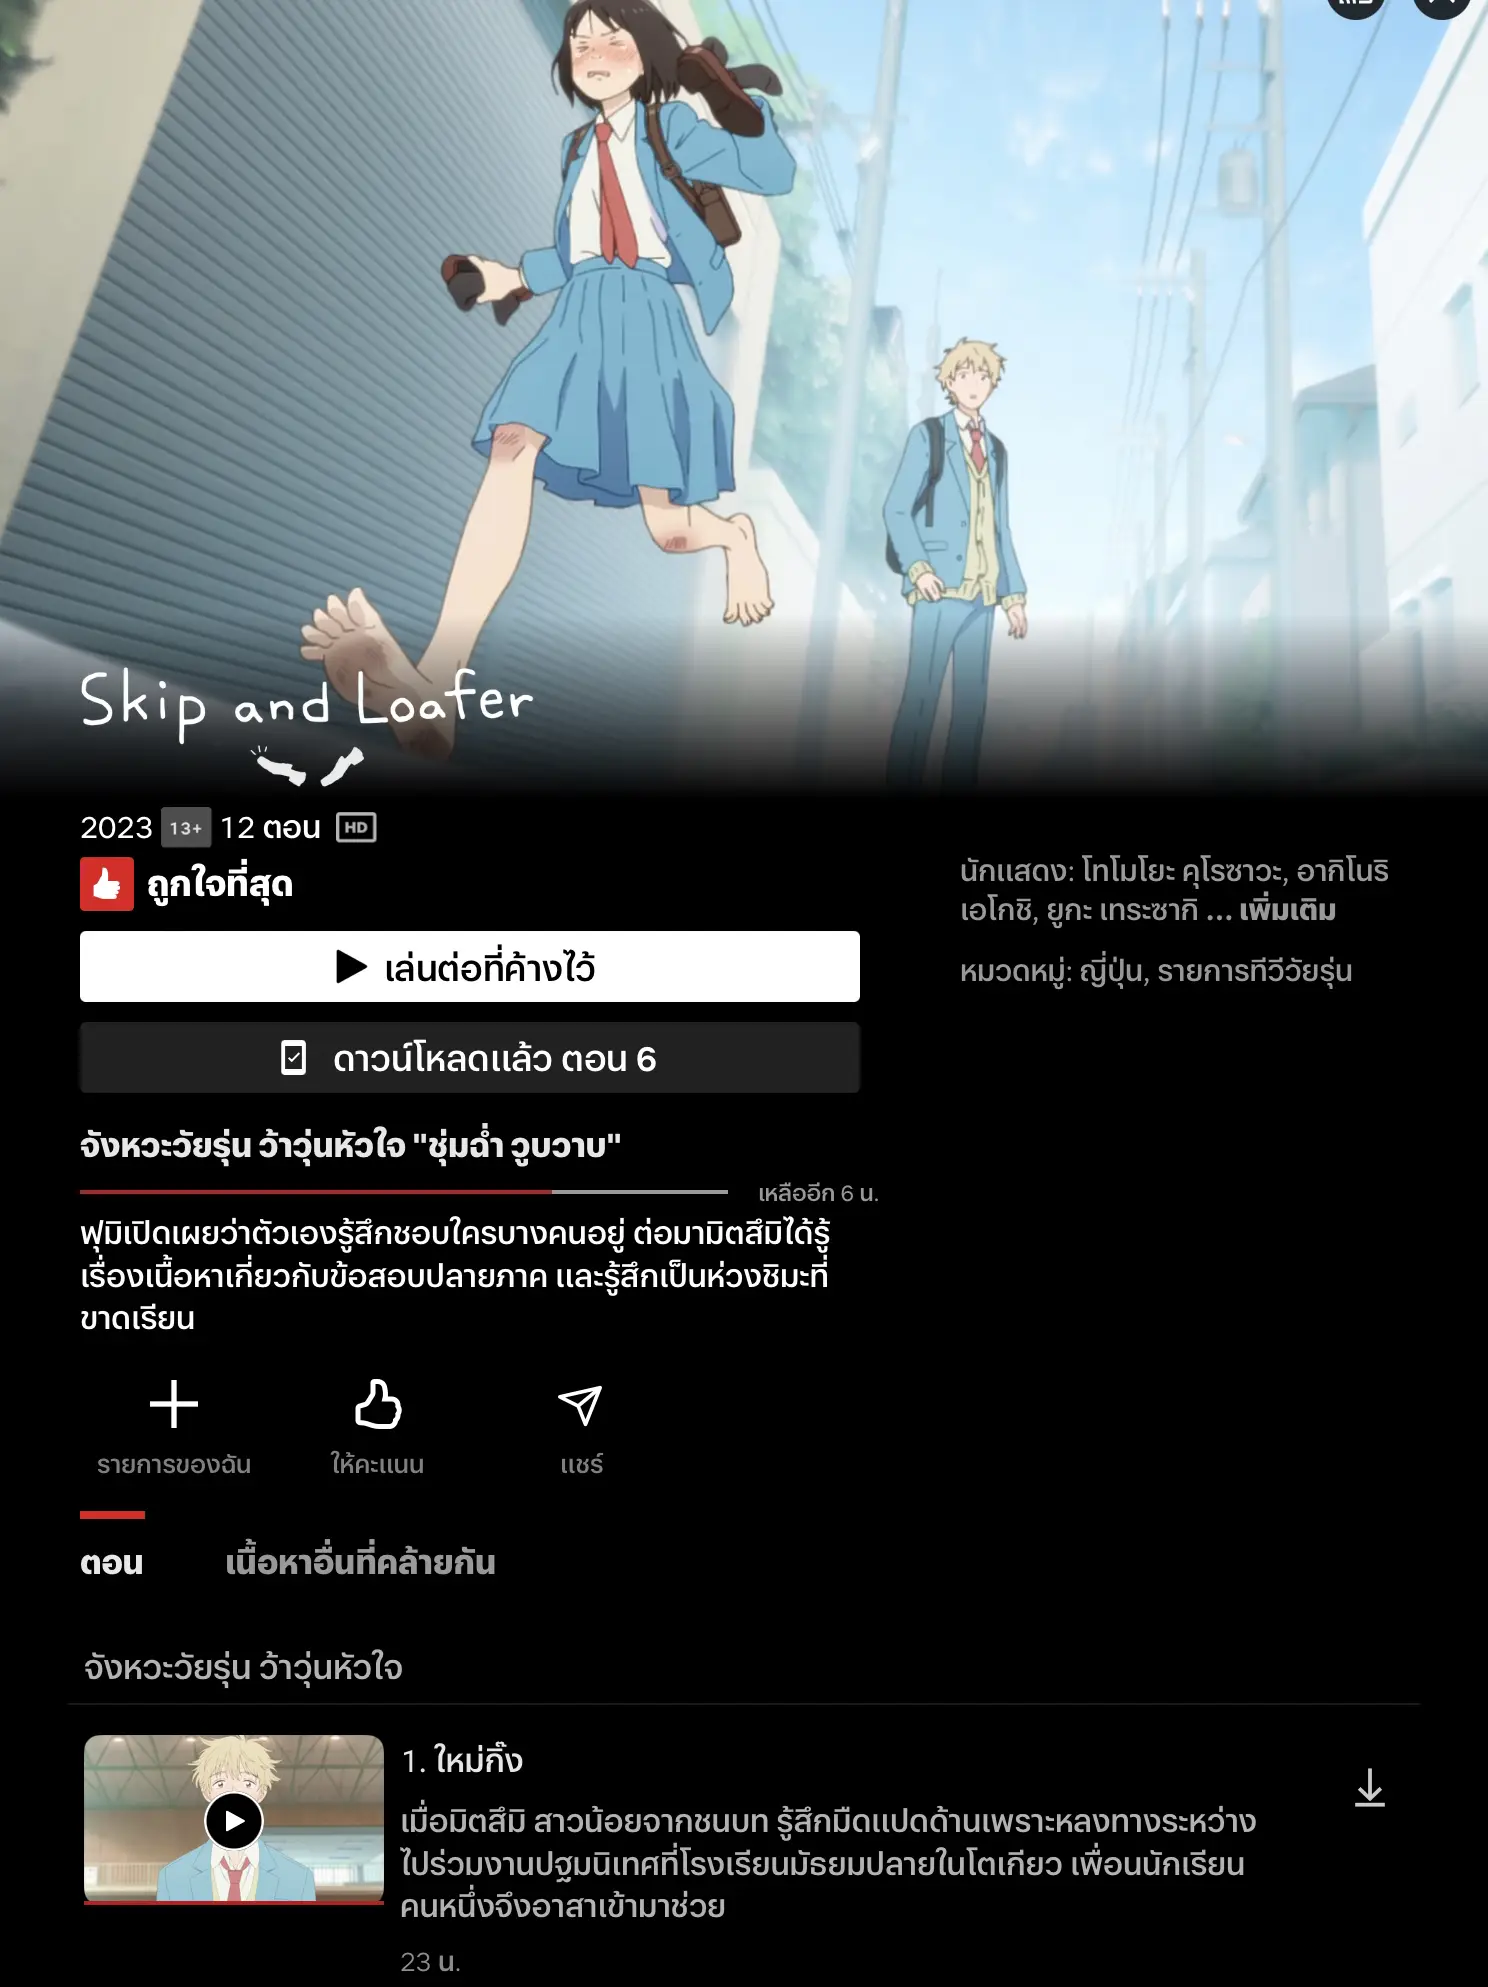 Skip to Loafer - Episódio 1 - Animes Online